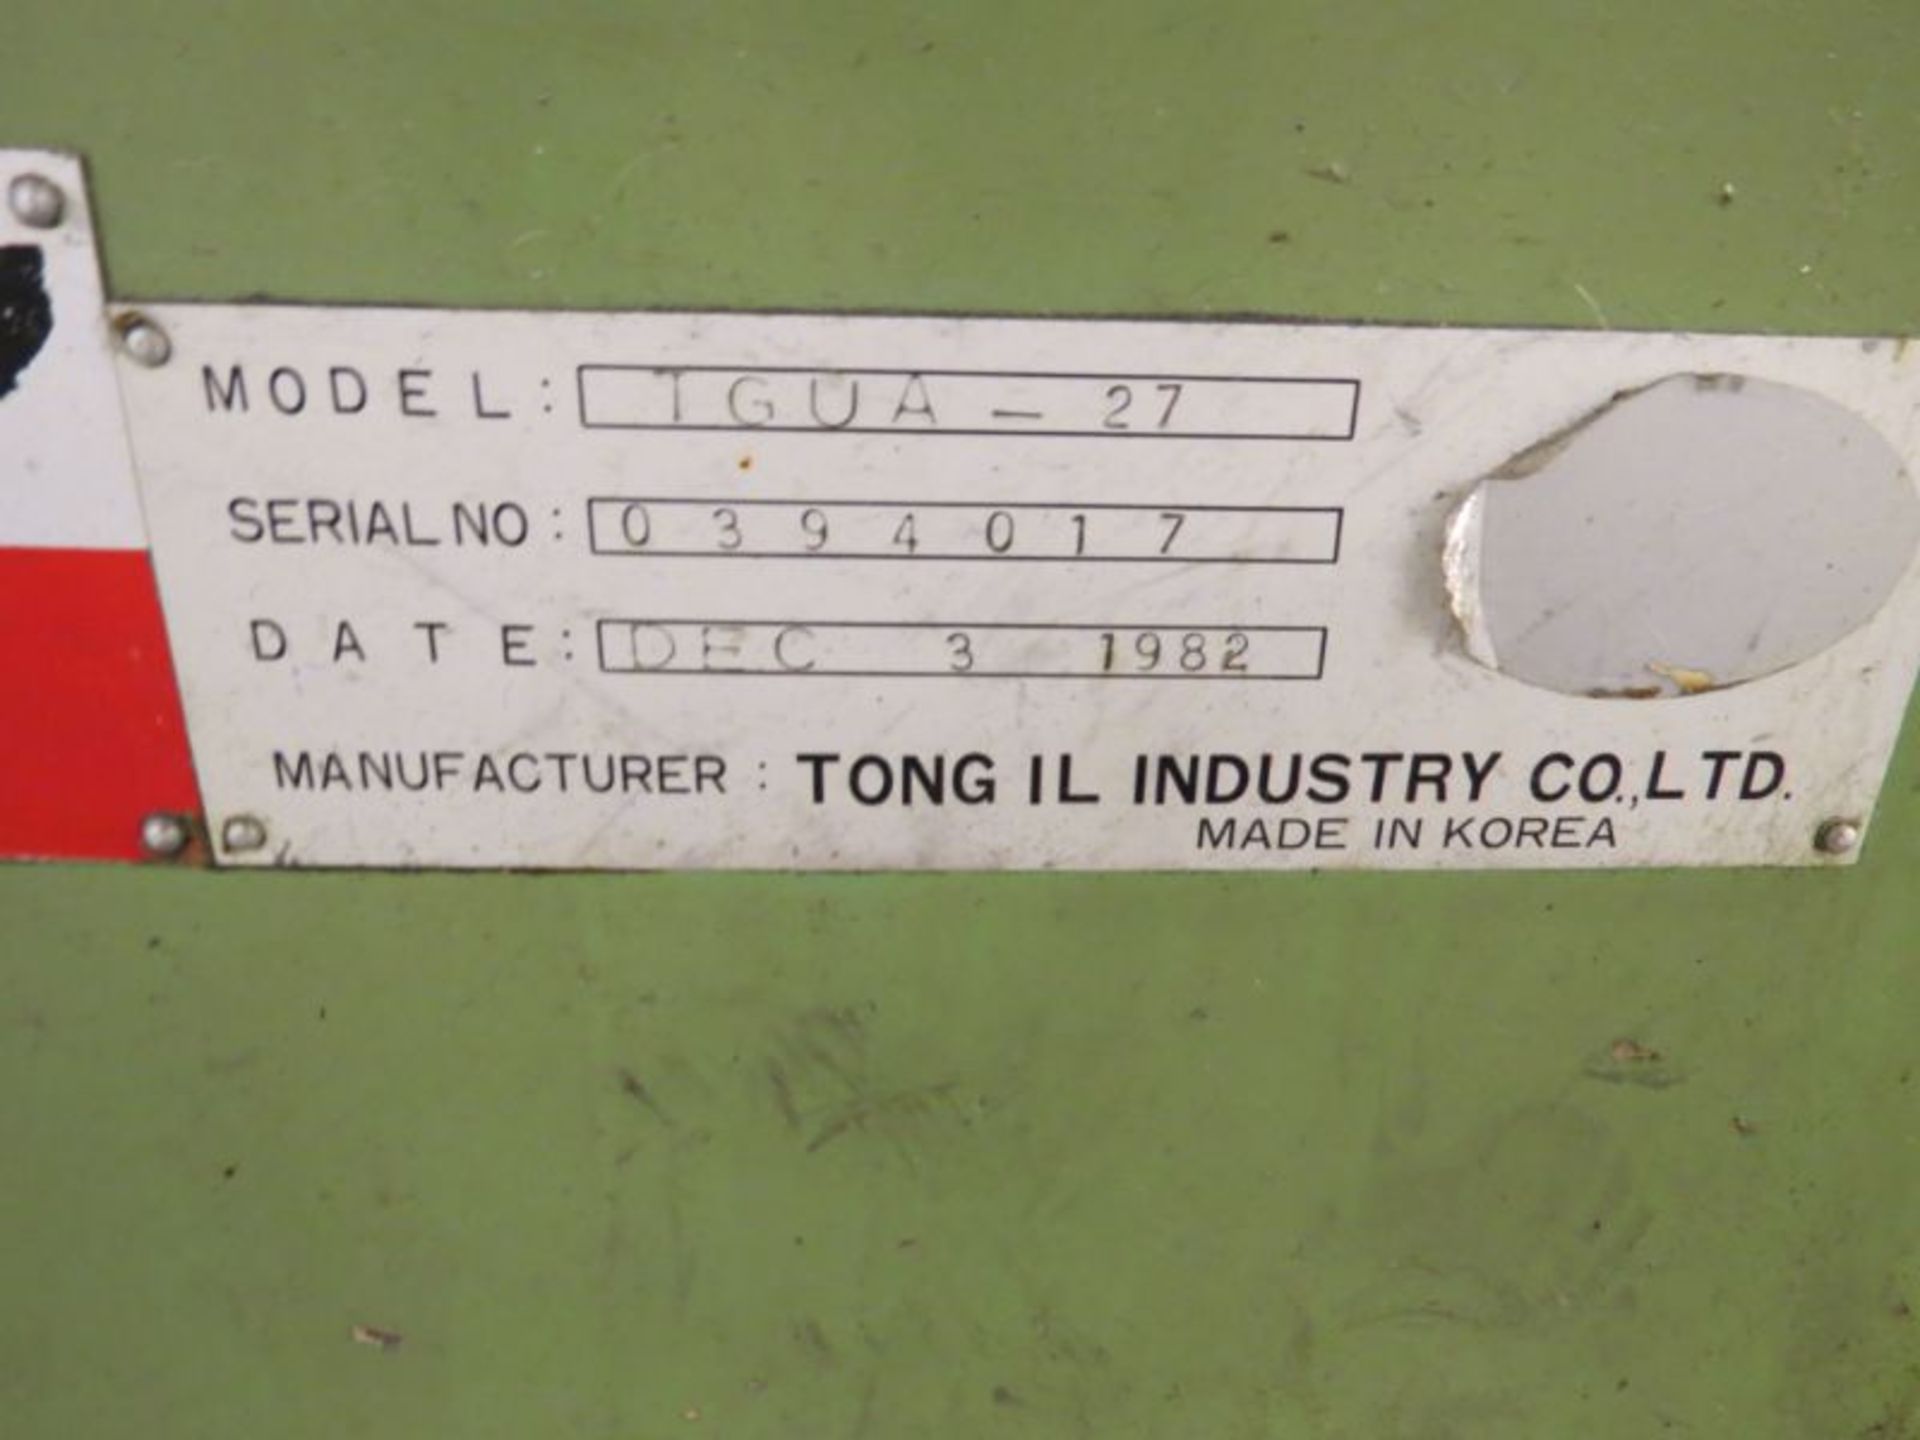 Tongil TGUA -27 OD Grinder, 6" 3 Jaw Chuck, s/n 0394017, New 1982 - Image 7 of 7